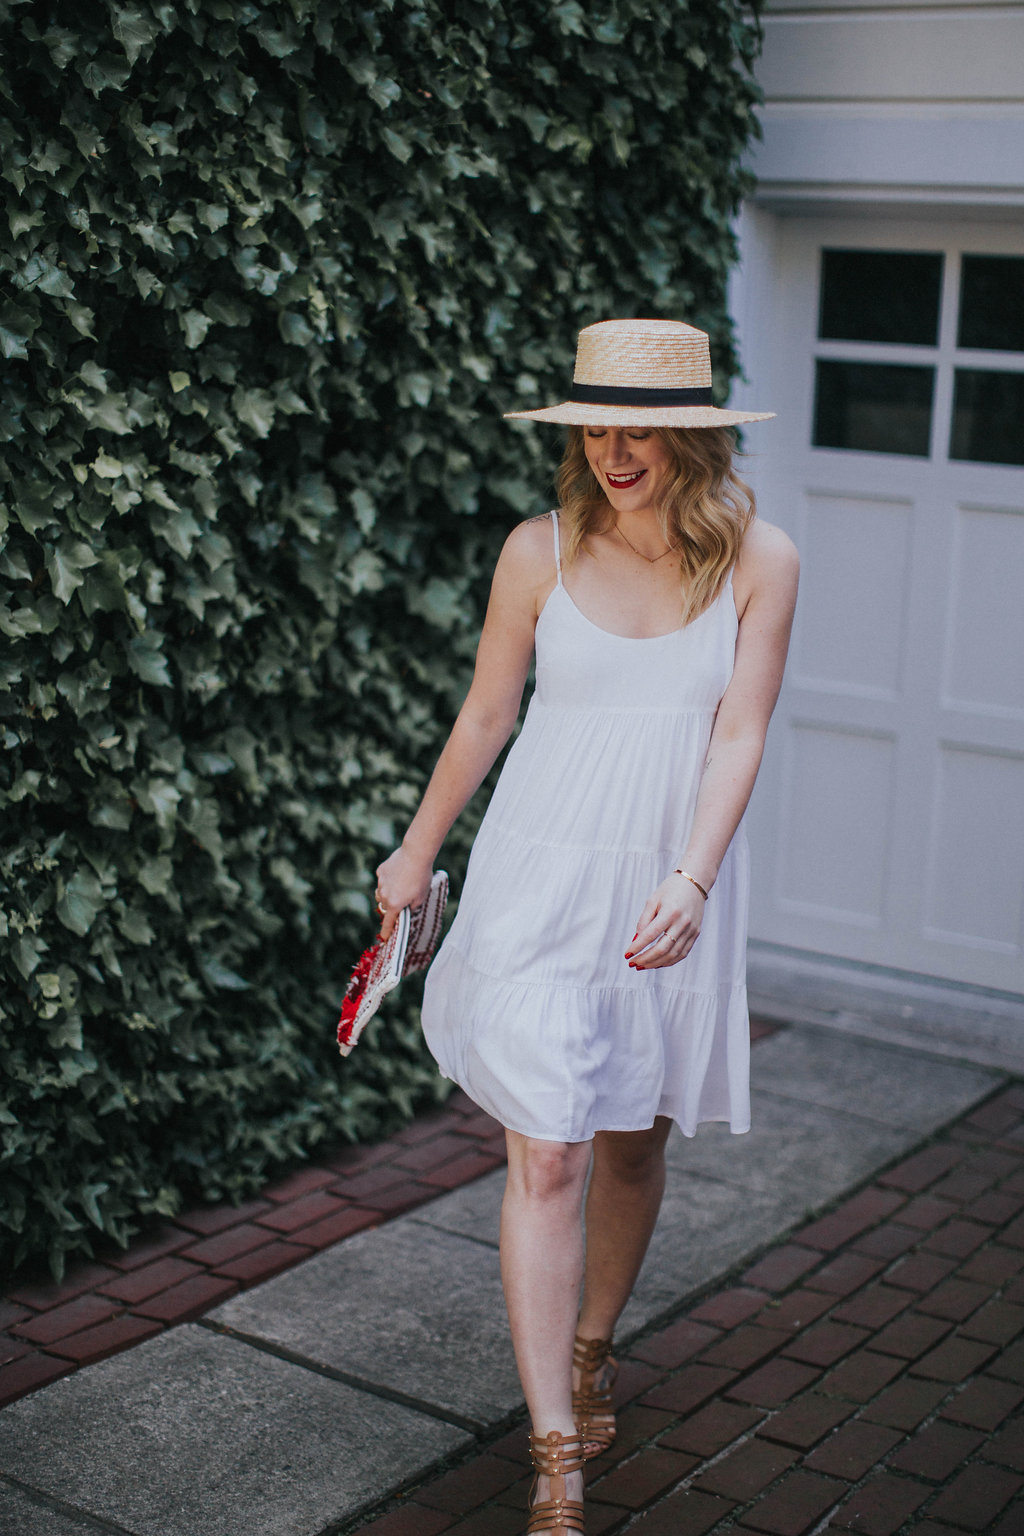 The Best Little White Dress // Cait Weingartner wears a Club Monaco white dress and Steve Madden heels perfect for summer.